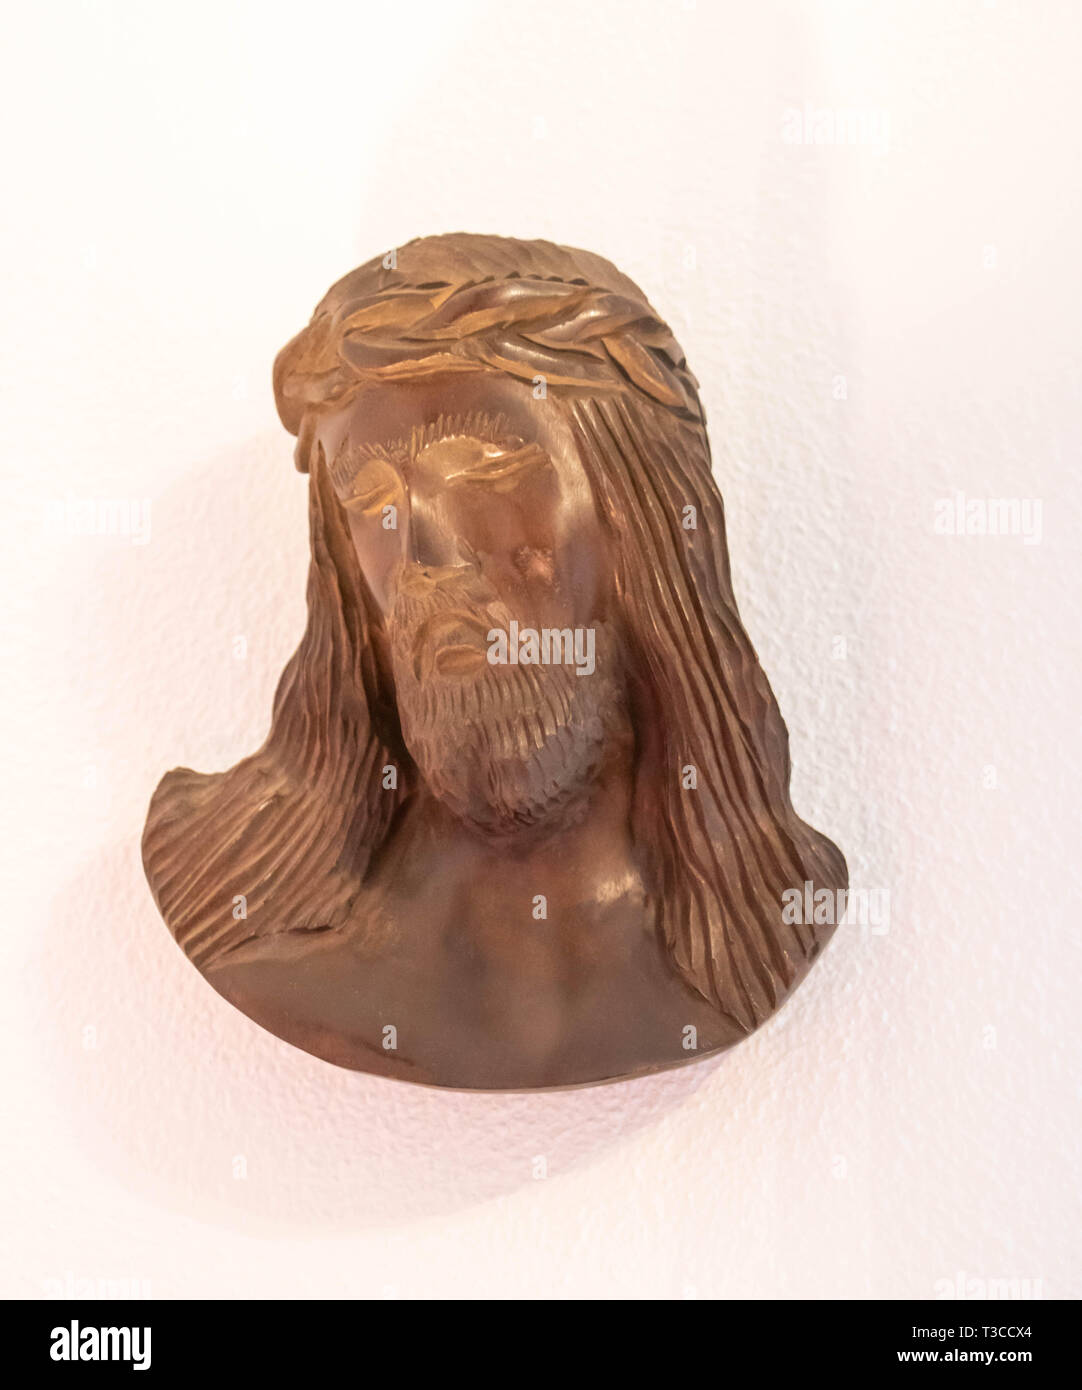 Wooden statue, head of Jesus Christ on the cross Stock Photo